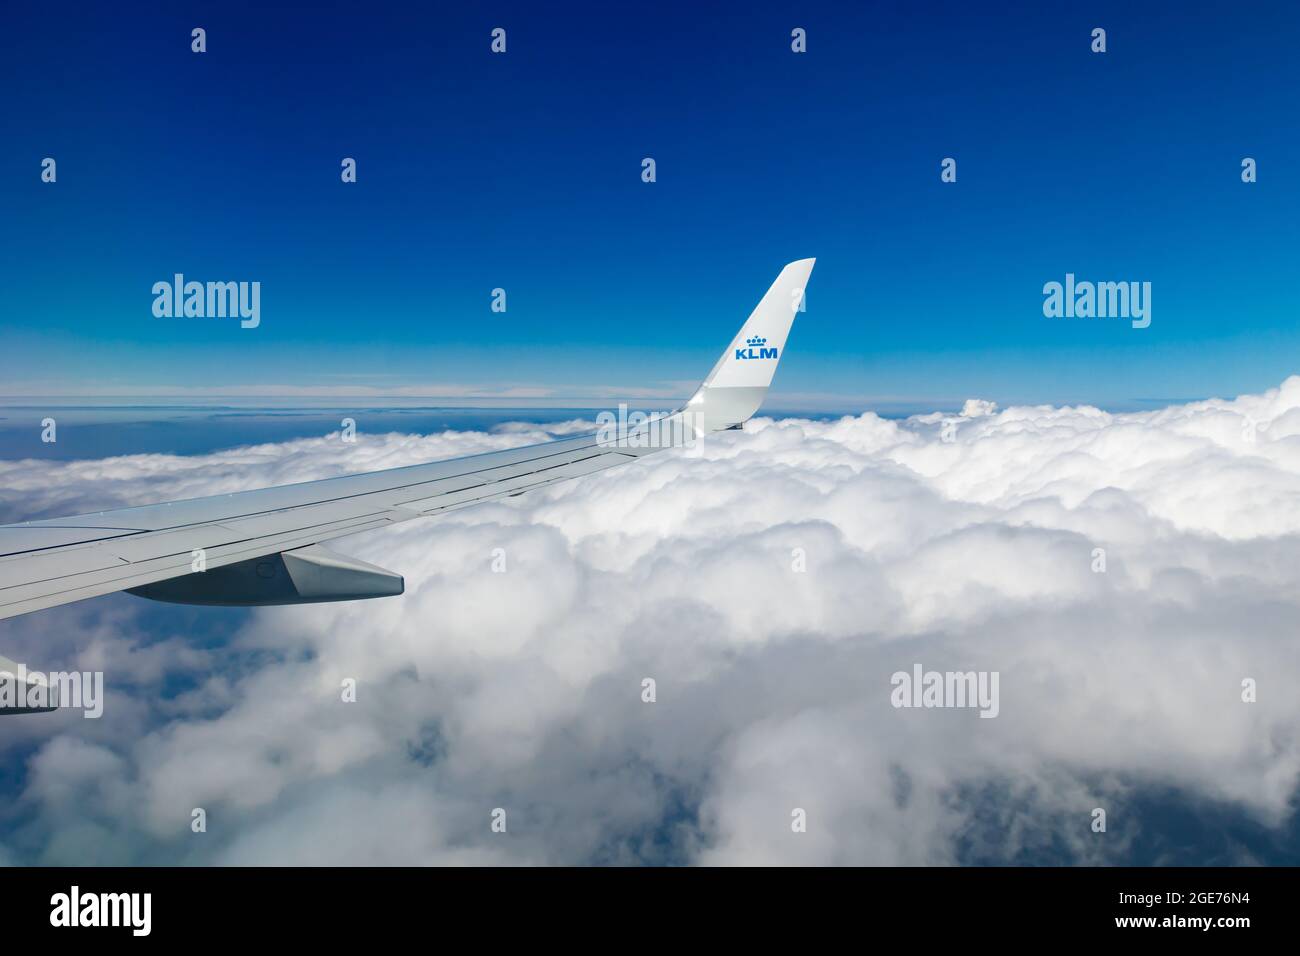 Helsinki, Finlandia - 7 luglio 2021: KLM Plain ala su cielo blu. Volo da Helsinki ad Amsterdam. Foto Stock